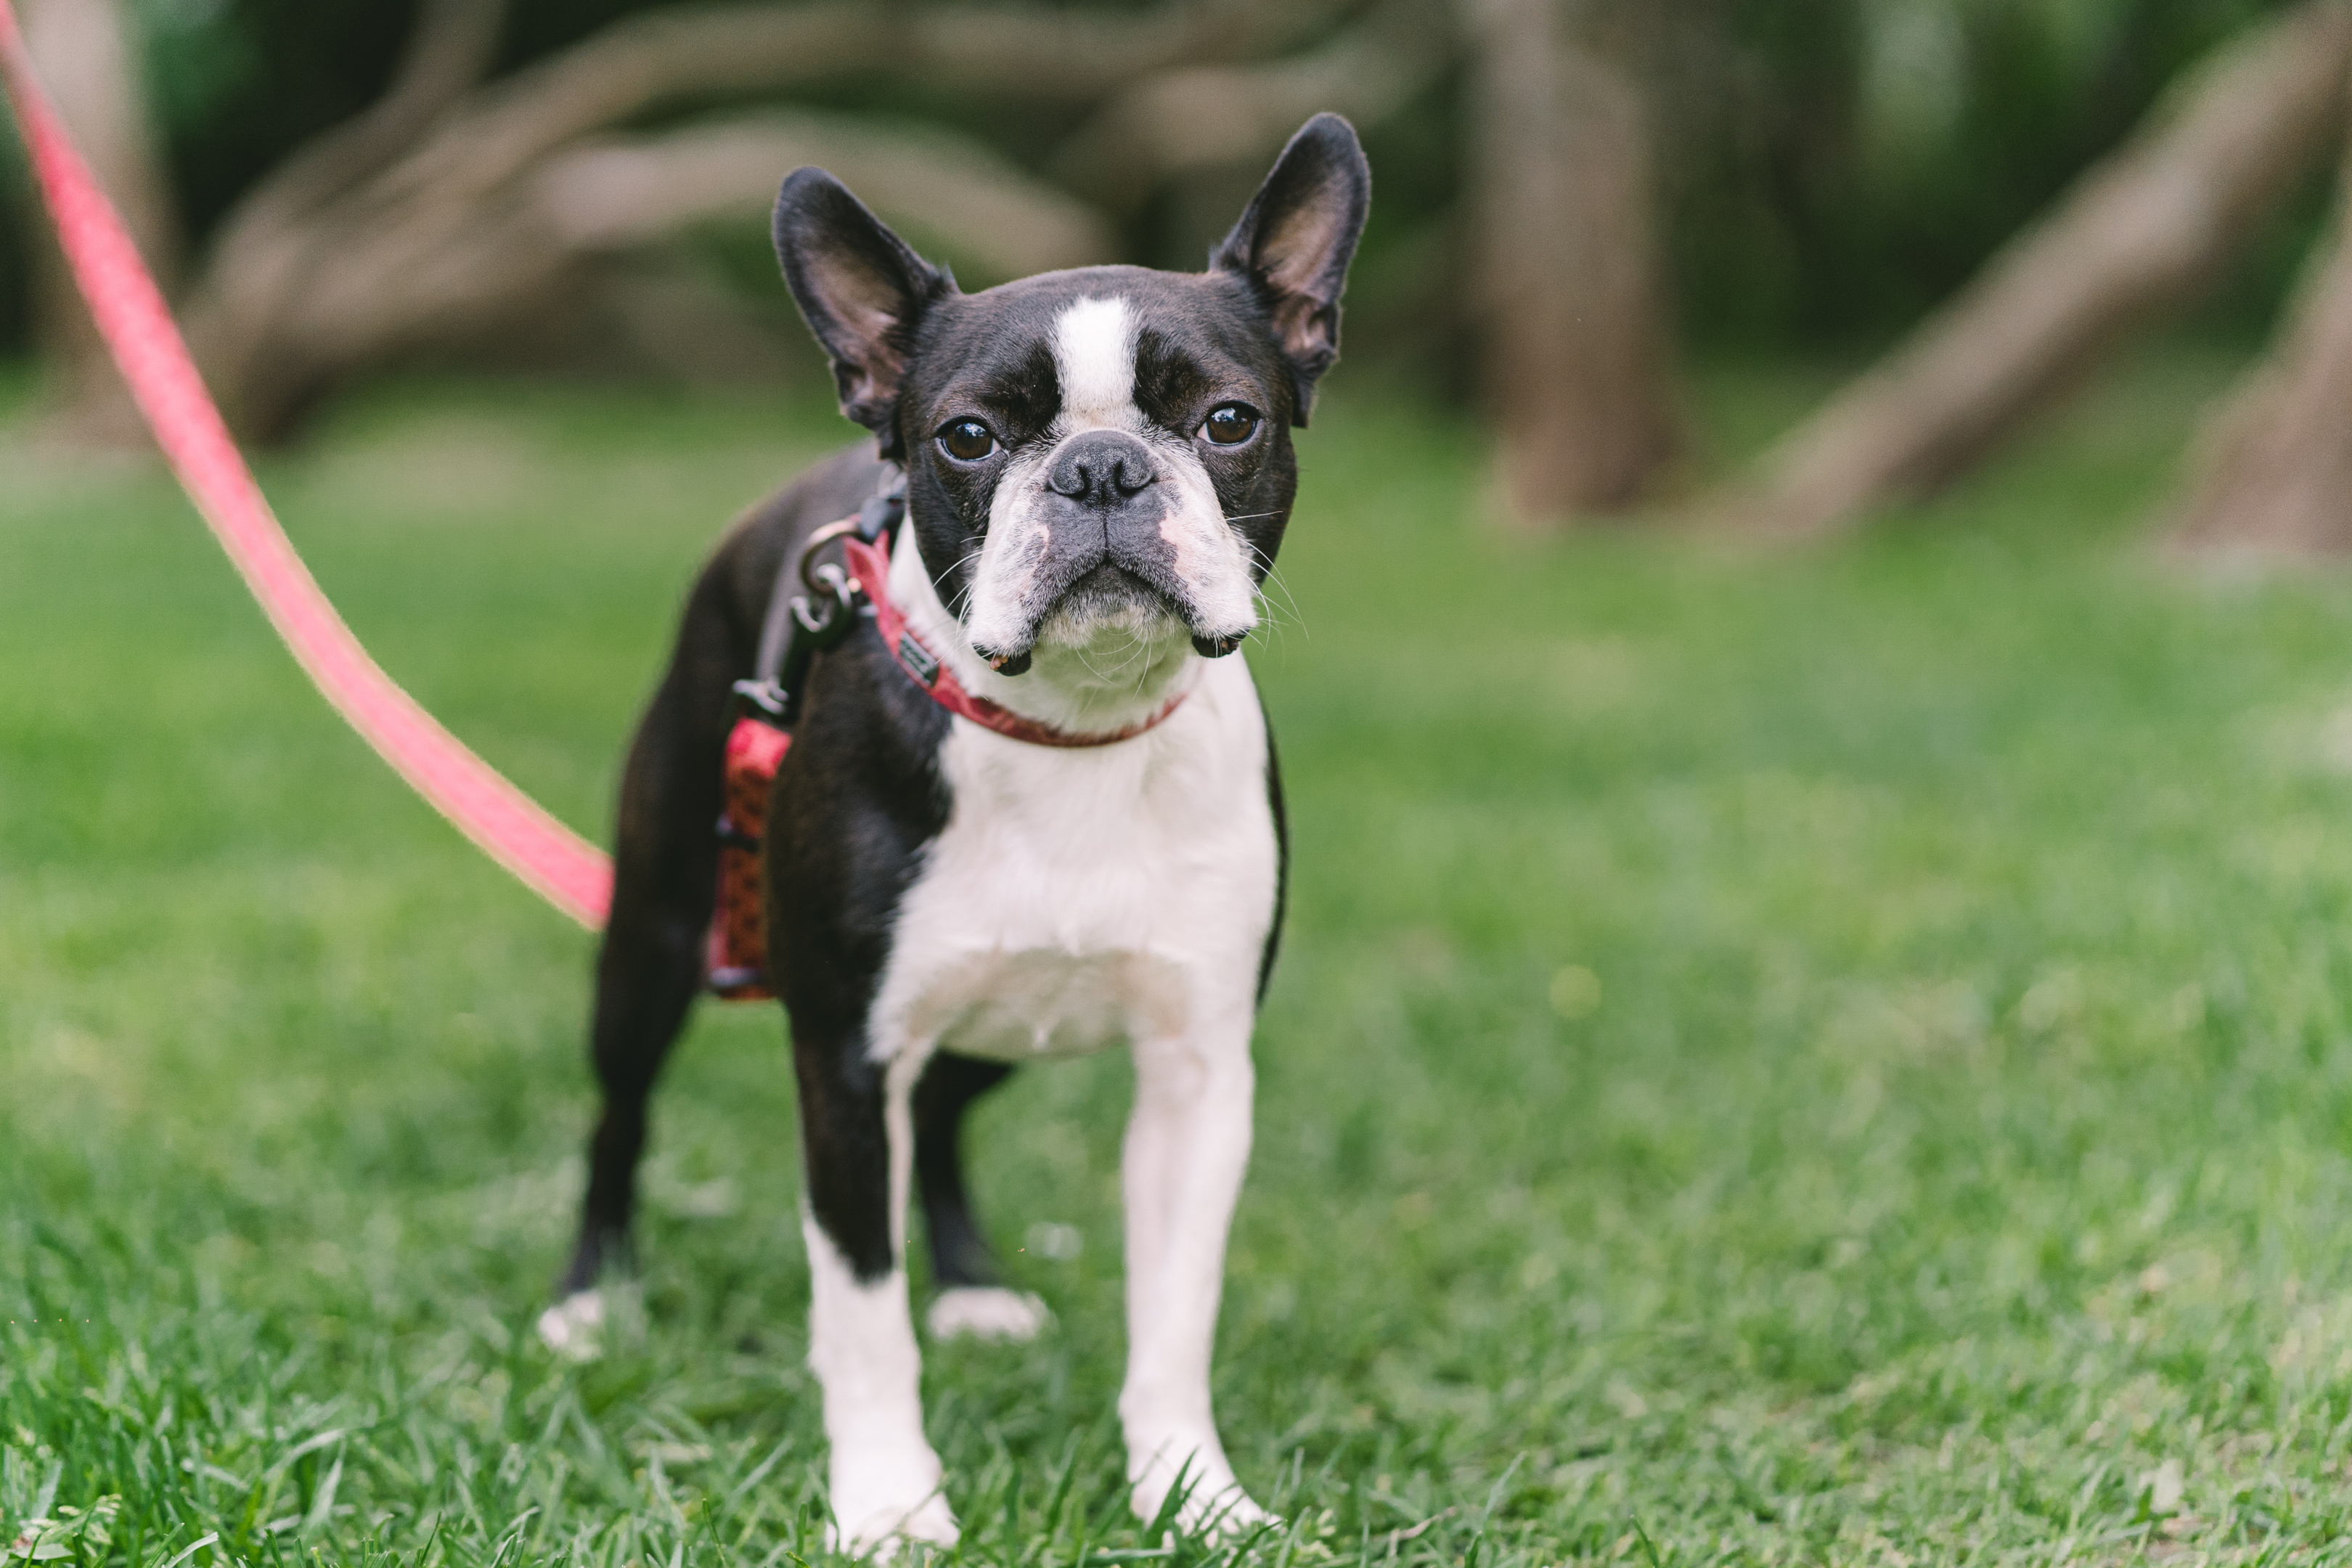 A senior Boston Terrier on a leash.